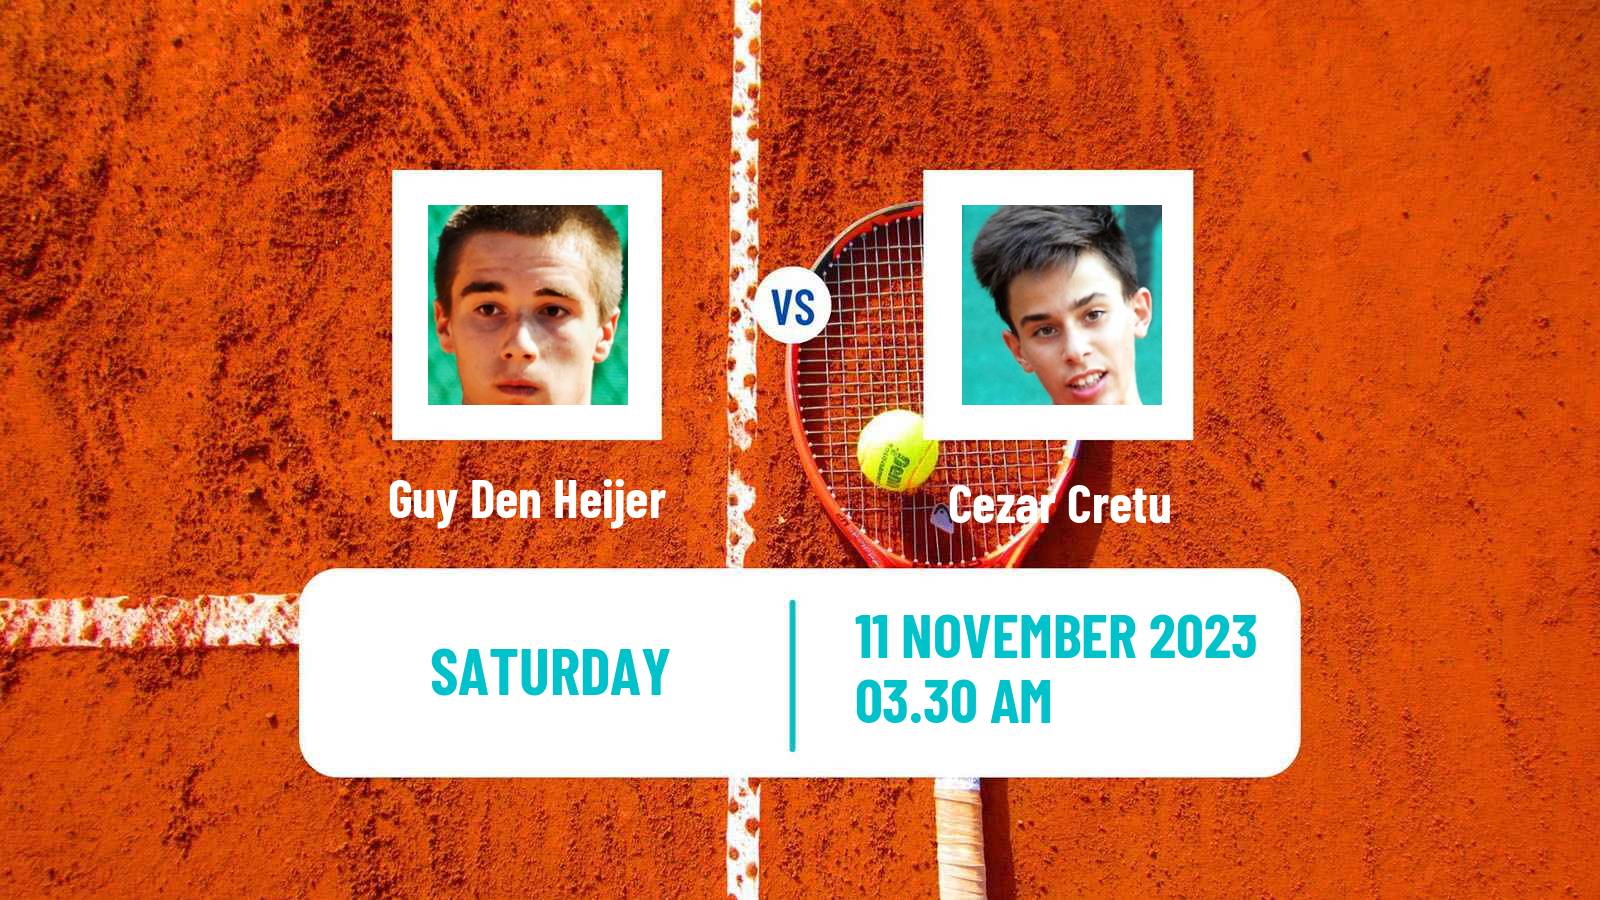 Tennis ITF M25 Heraklion 2 Men Guy Den Heijer - Cezar Cretu